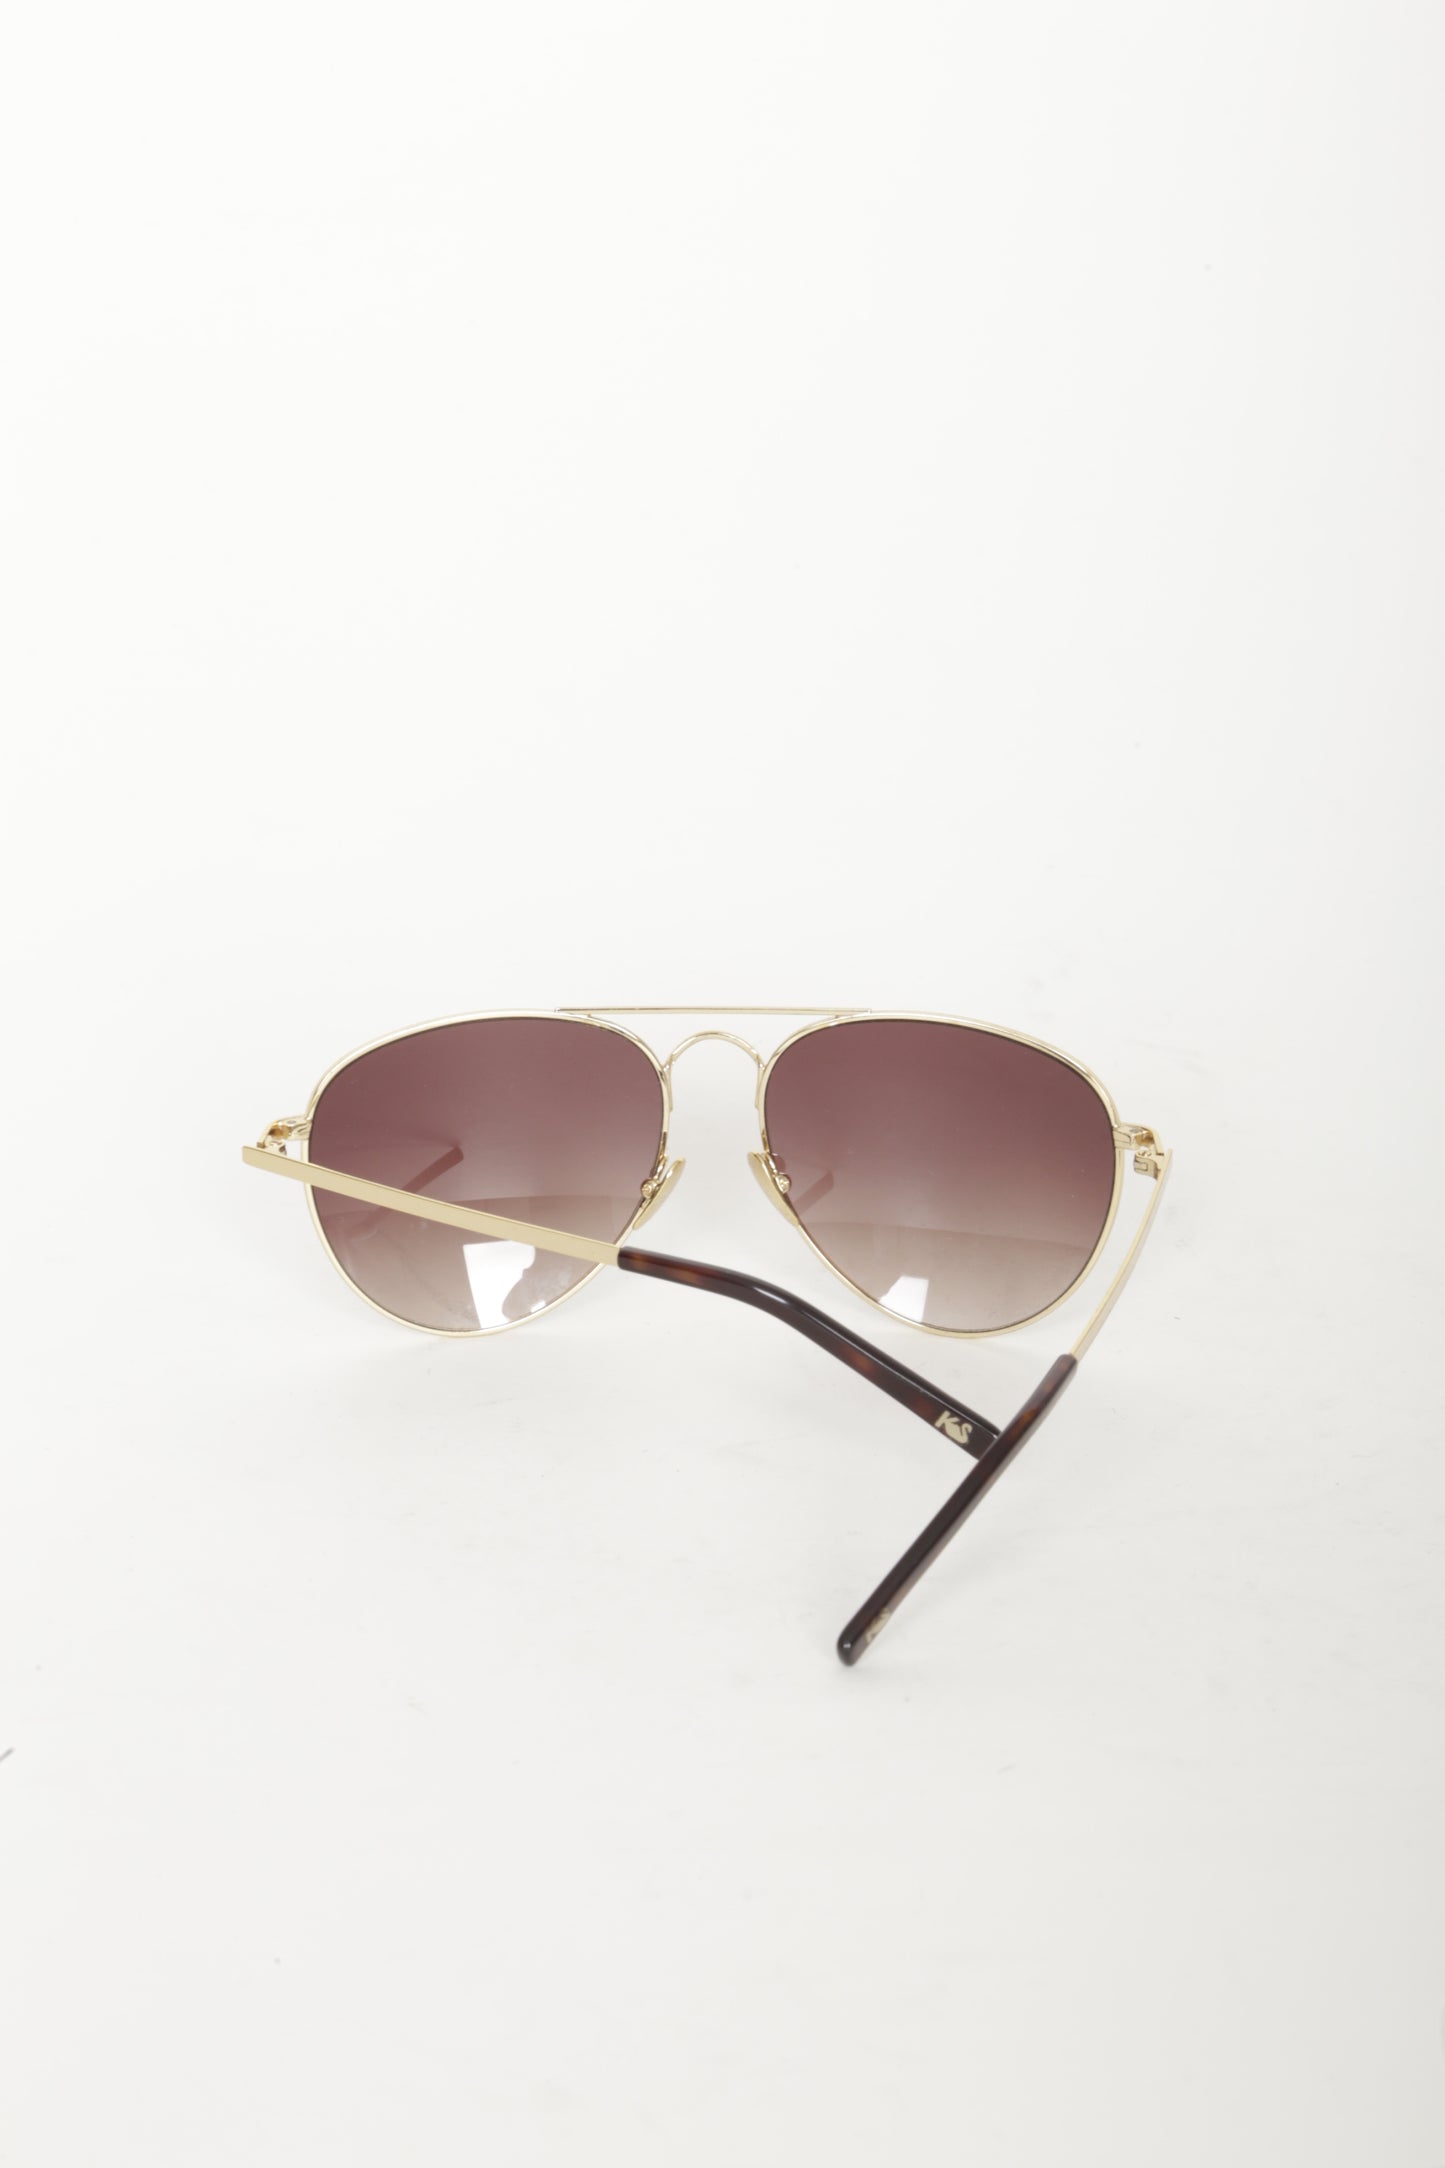 Kate Sylvester Unisex Gold Sunglasses Size O/S